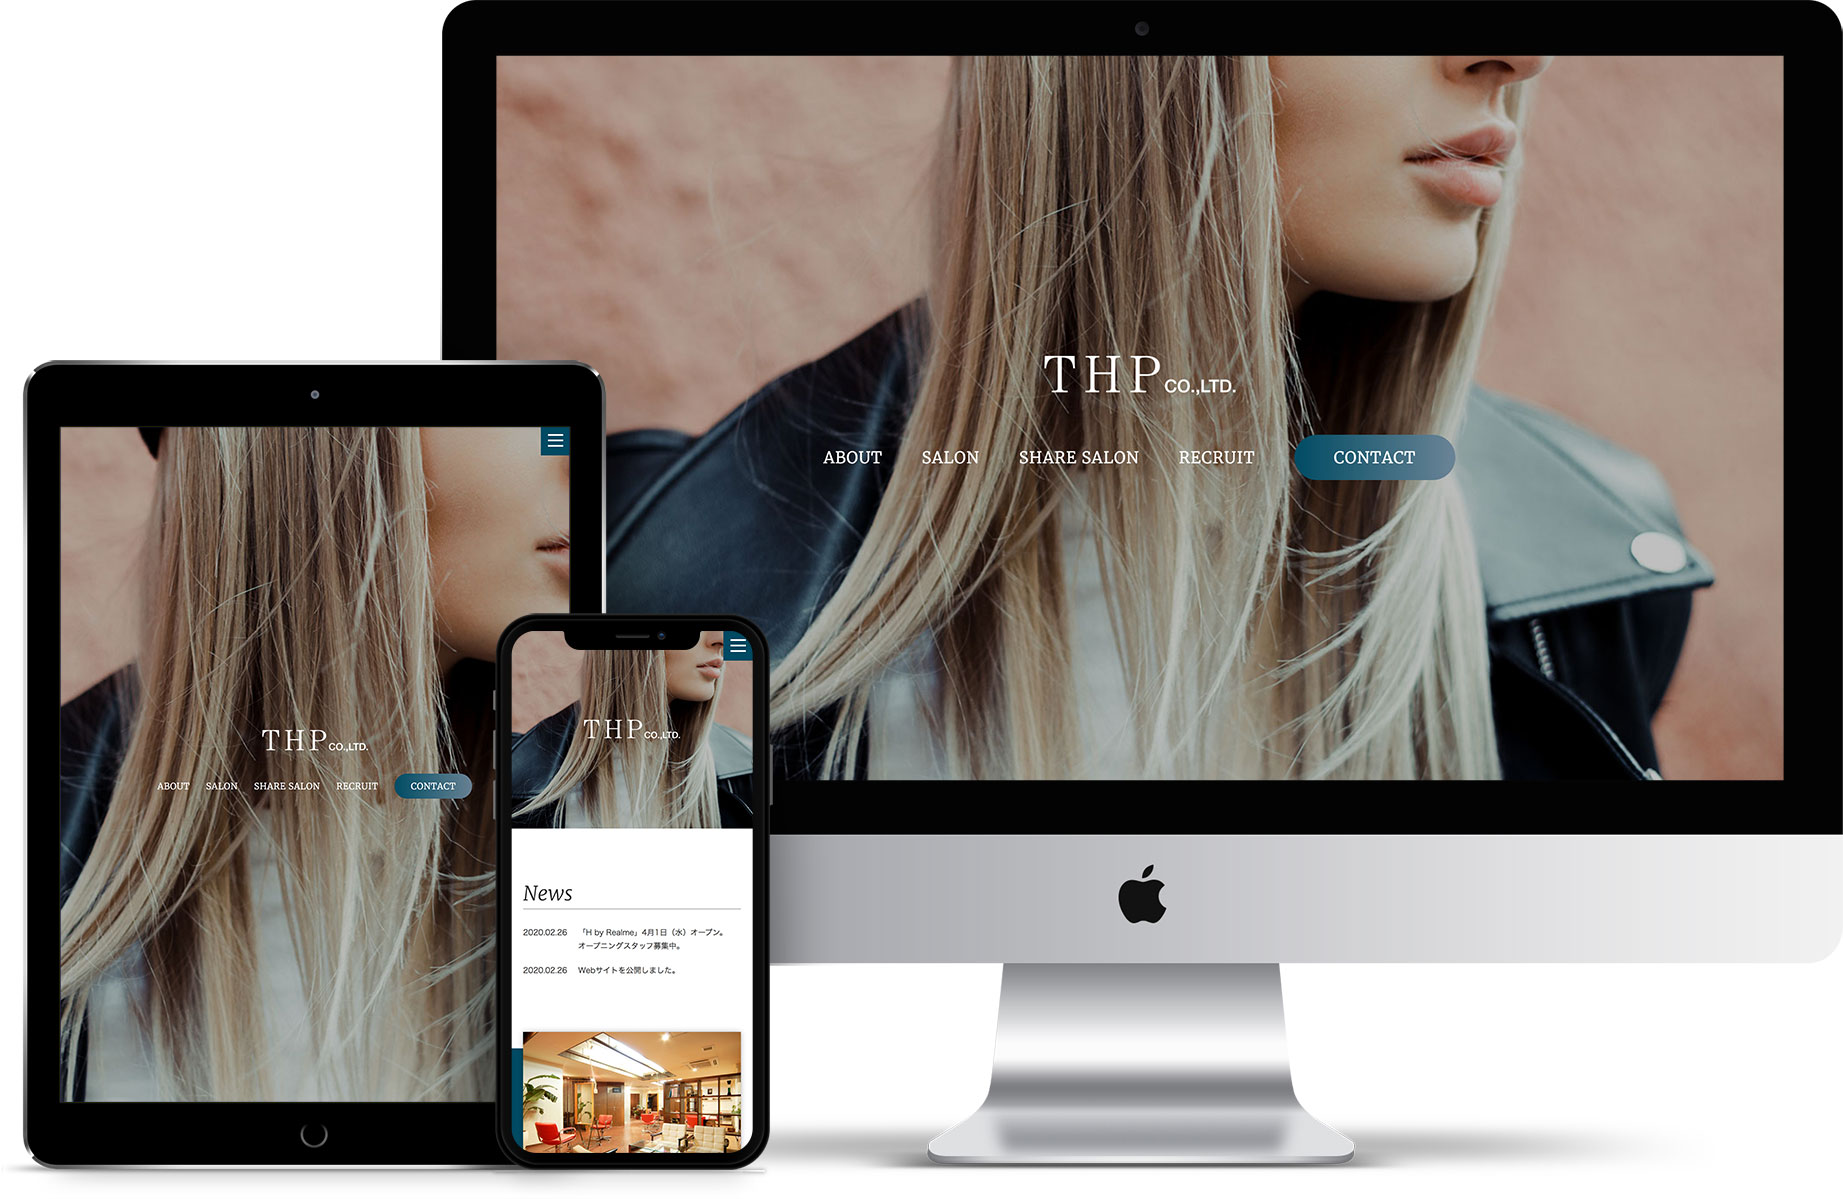 THP Co., Ltd. Website